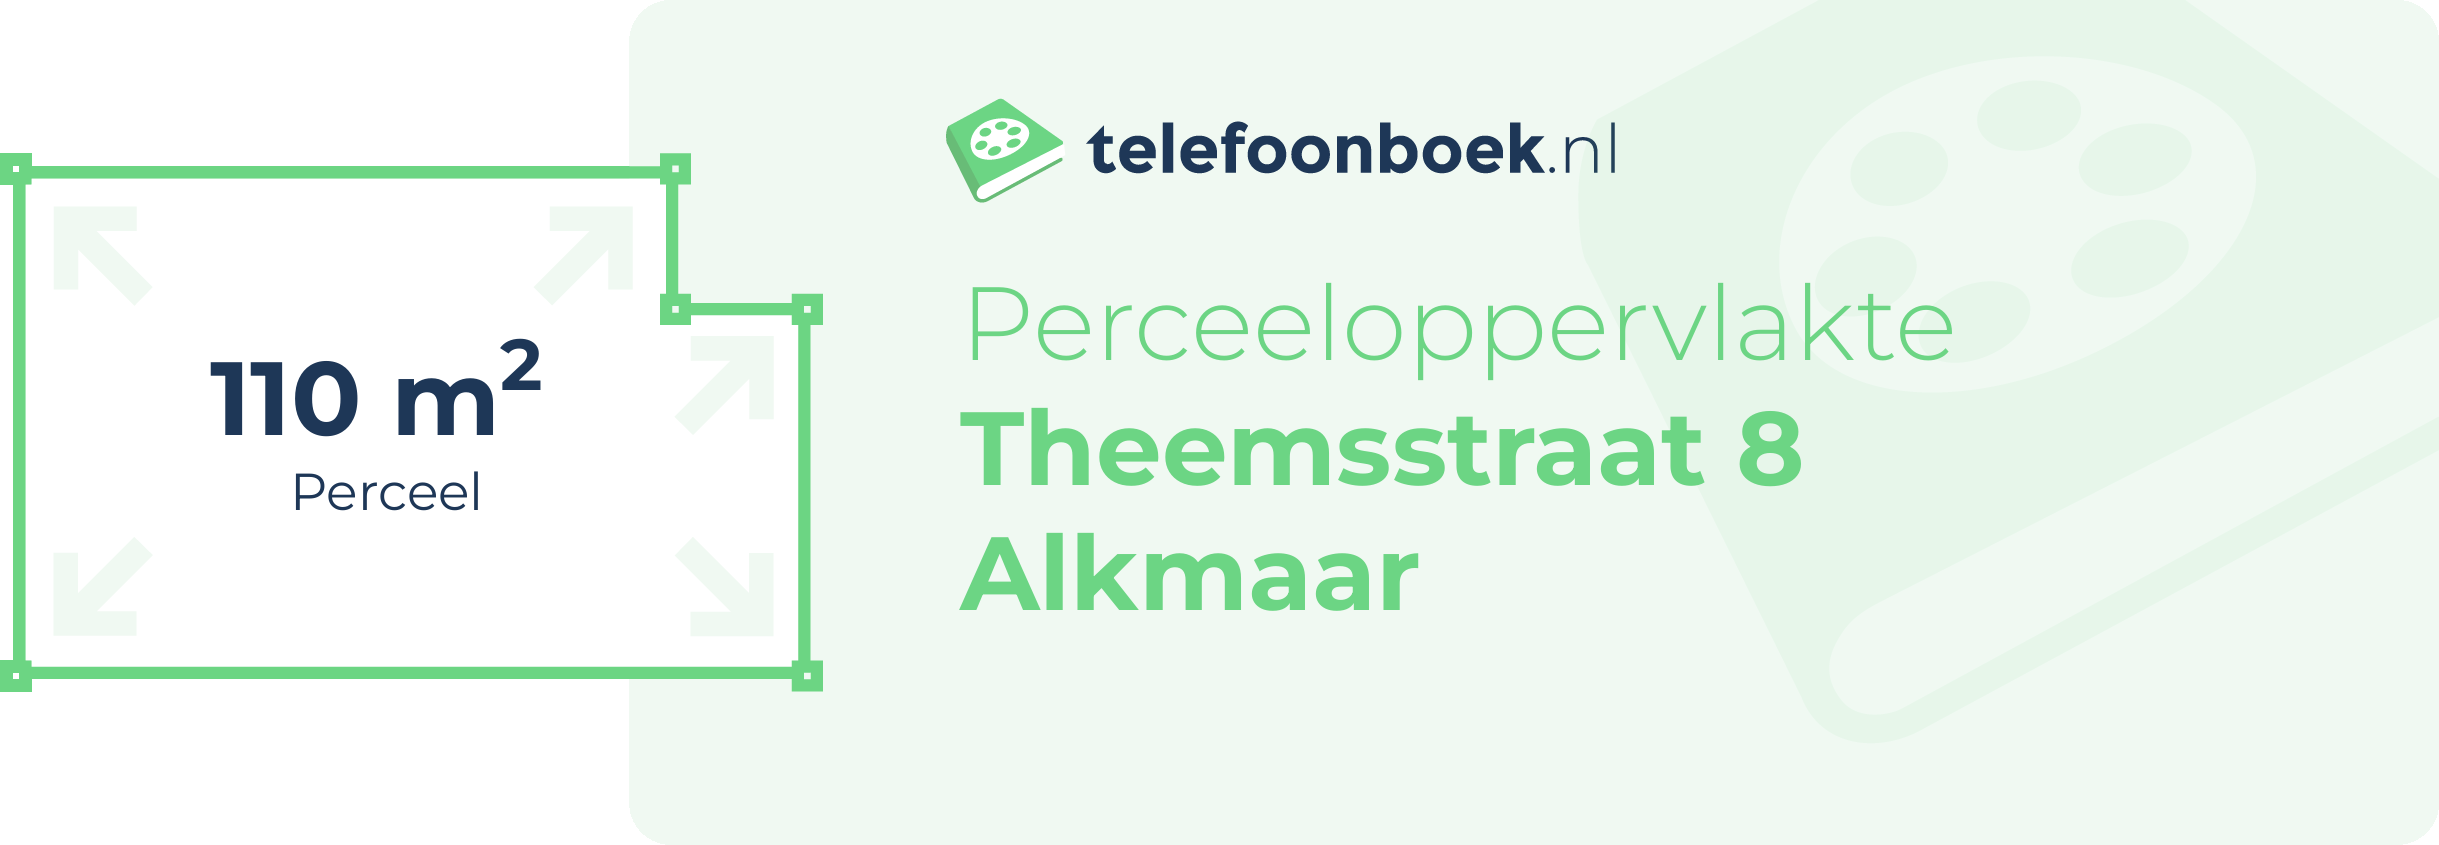 Perceeloppervlakte Theemsstraat 8 Alkmaar